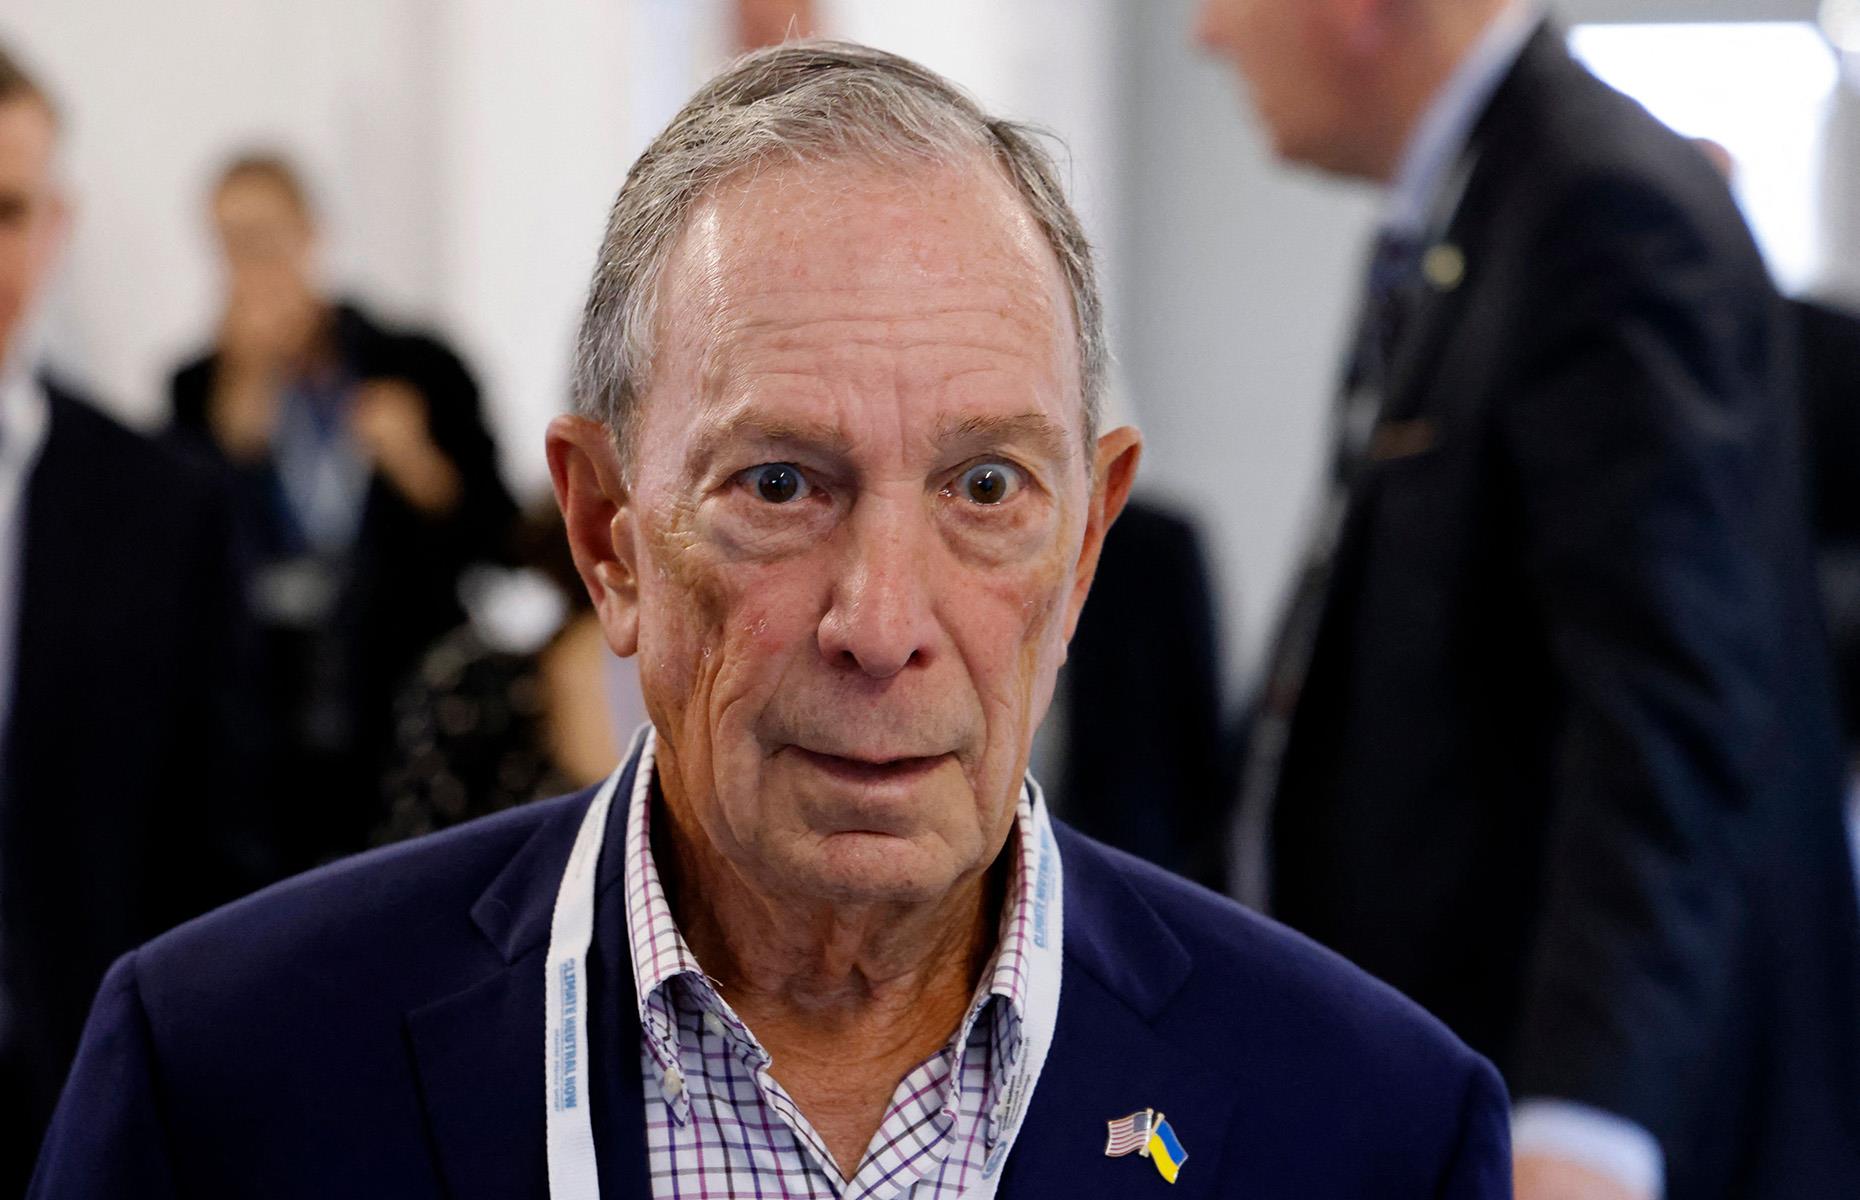 Michael Bloomberg: 11 homes